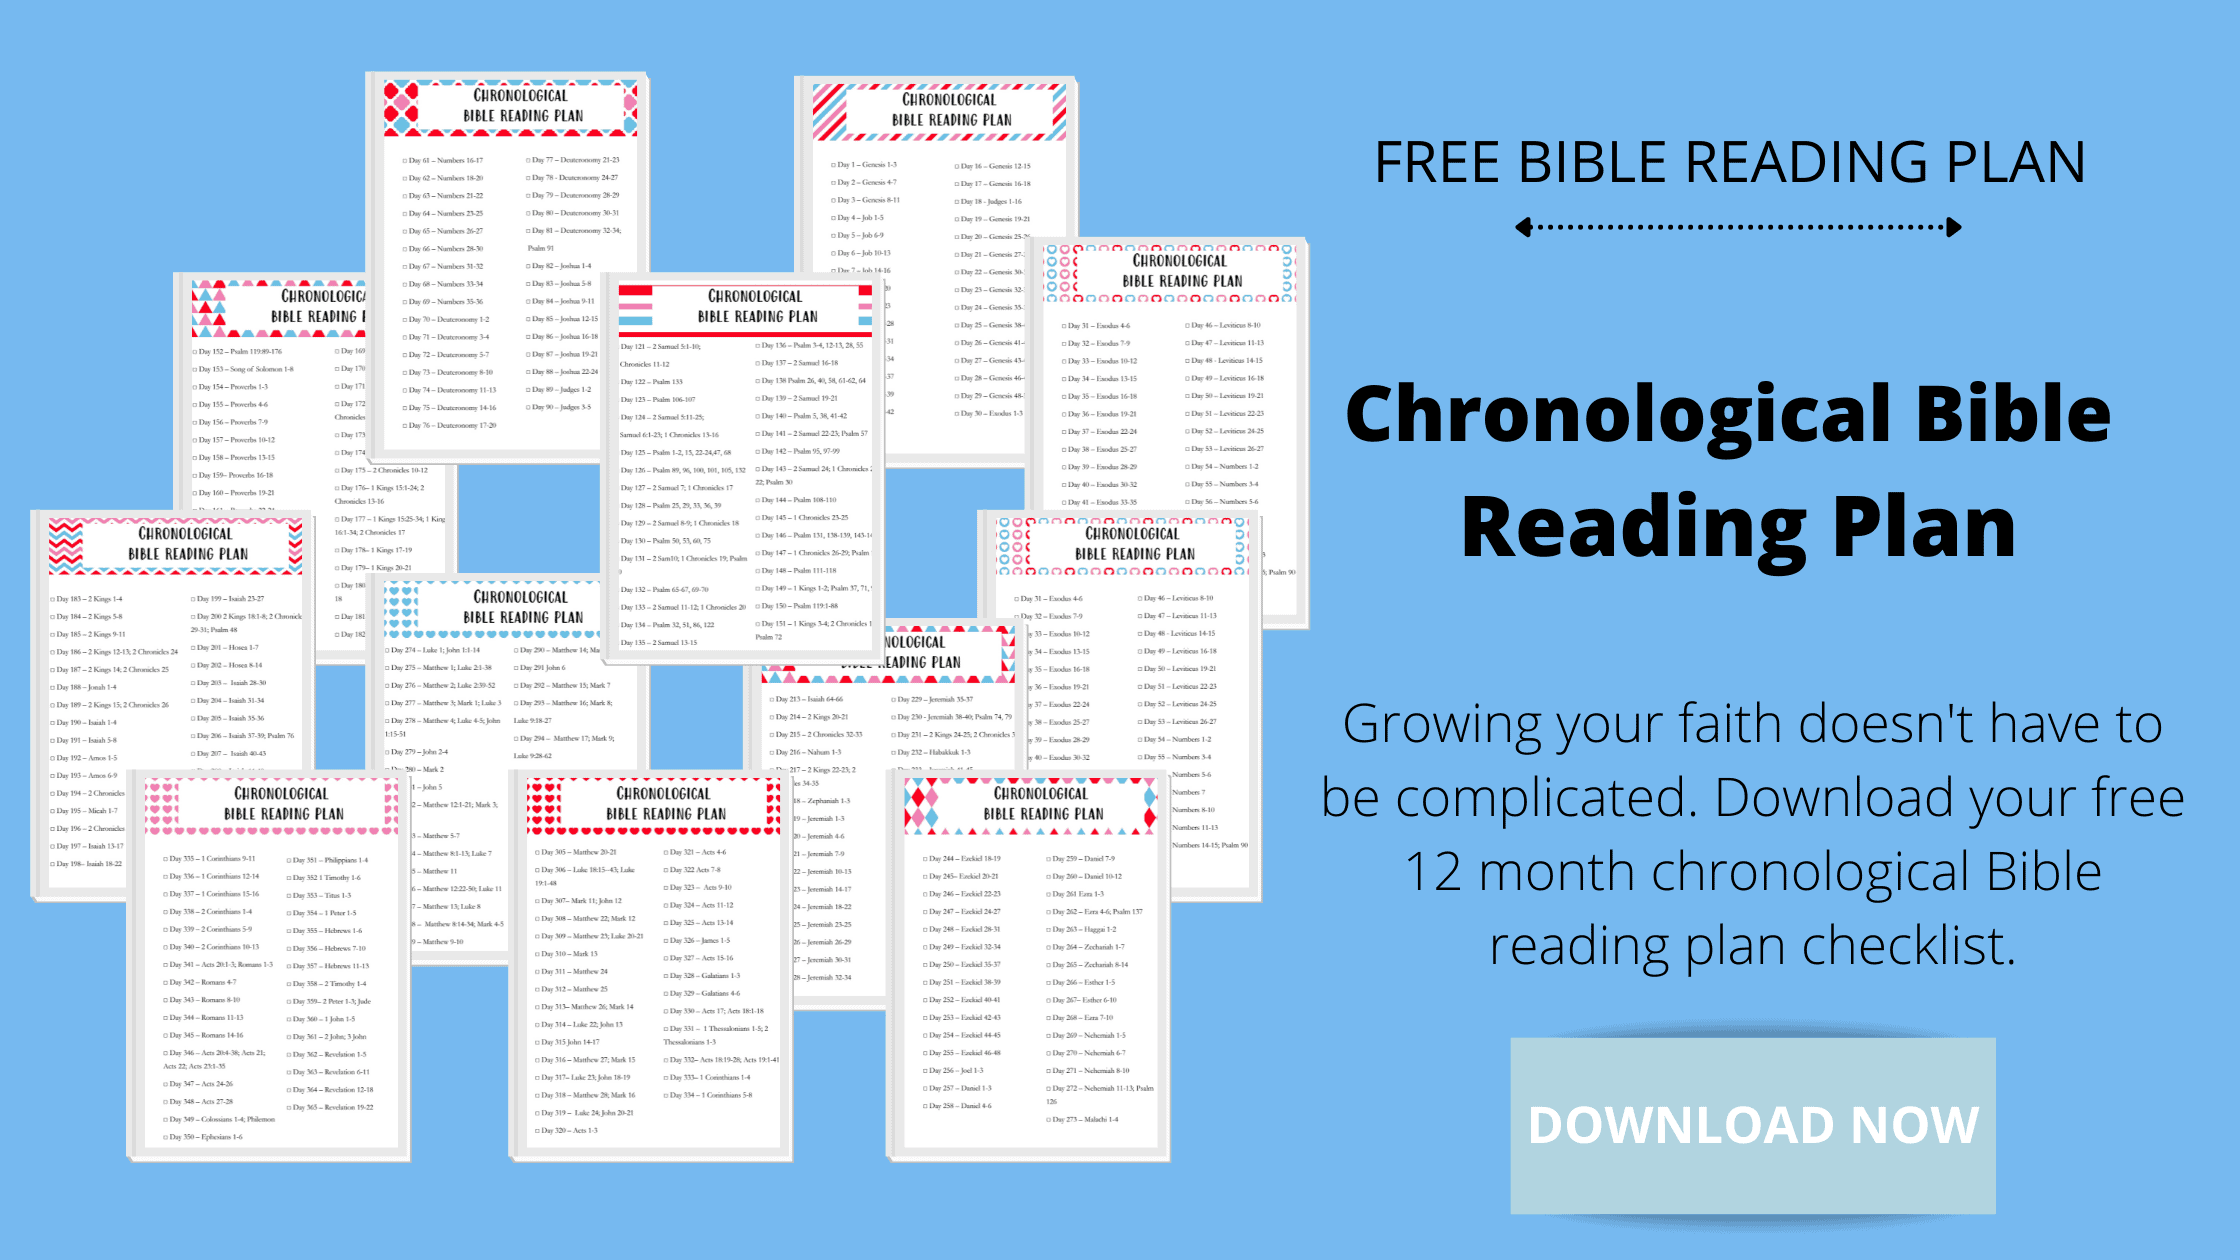 FREE CHRONOLOGICAL BIBLE READING PLAN